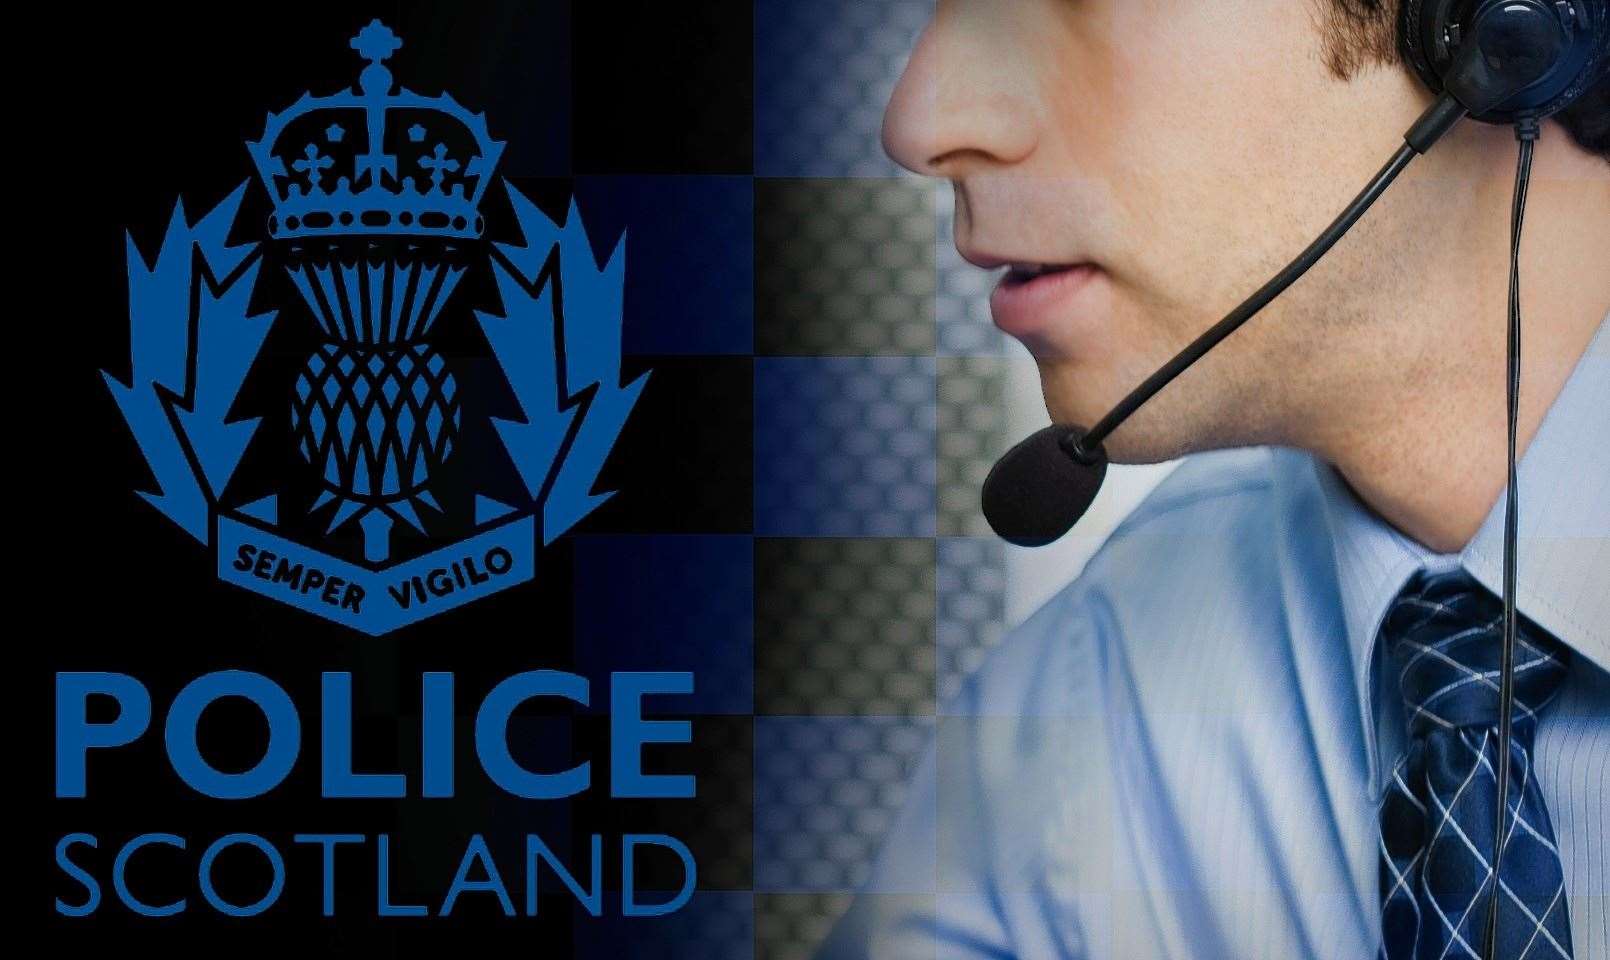 POLICE SCOTLAND LOGO and generic call centre staff.